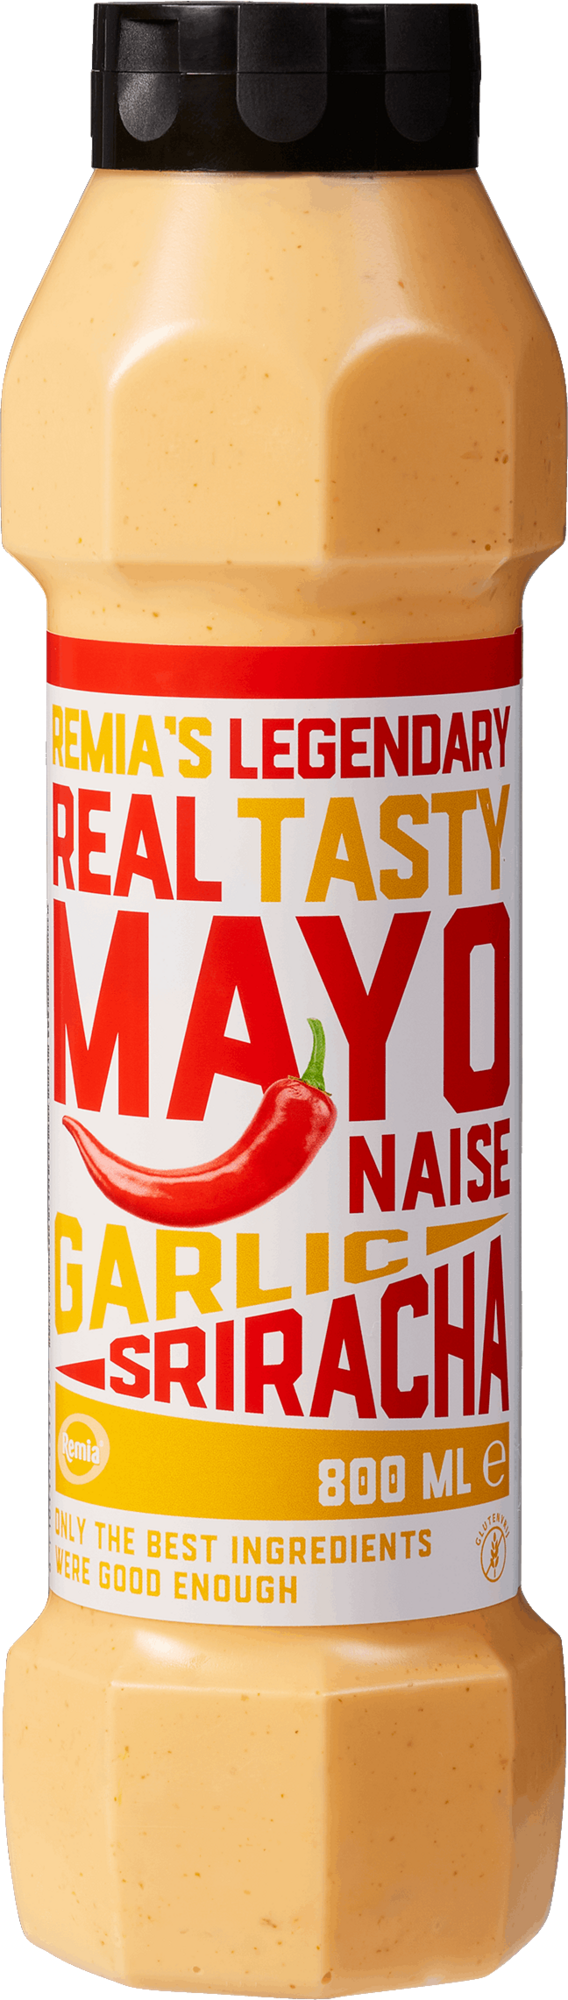 75013 Garlic sriracha mayonaise tube 1x800 ml